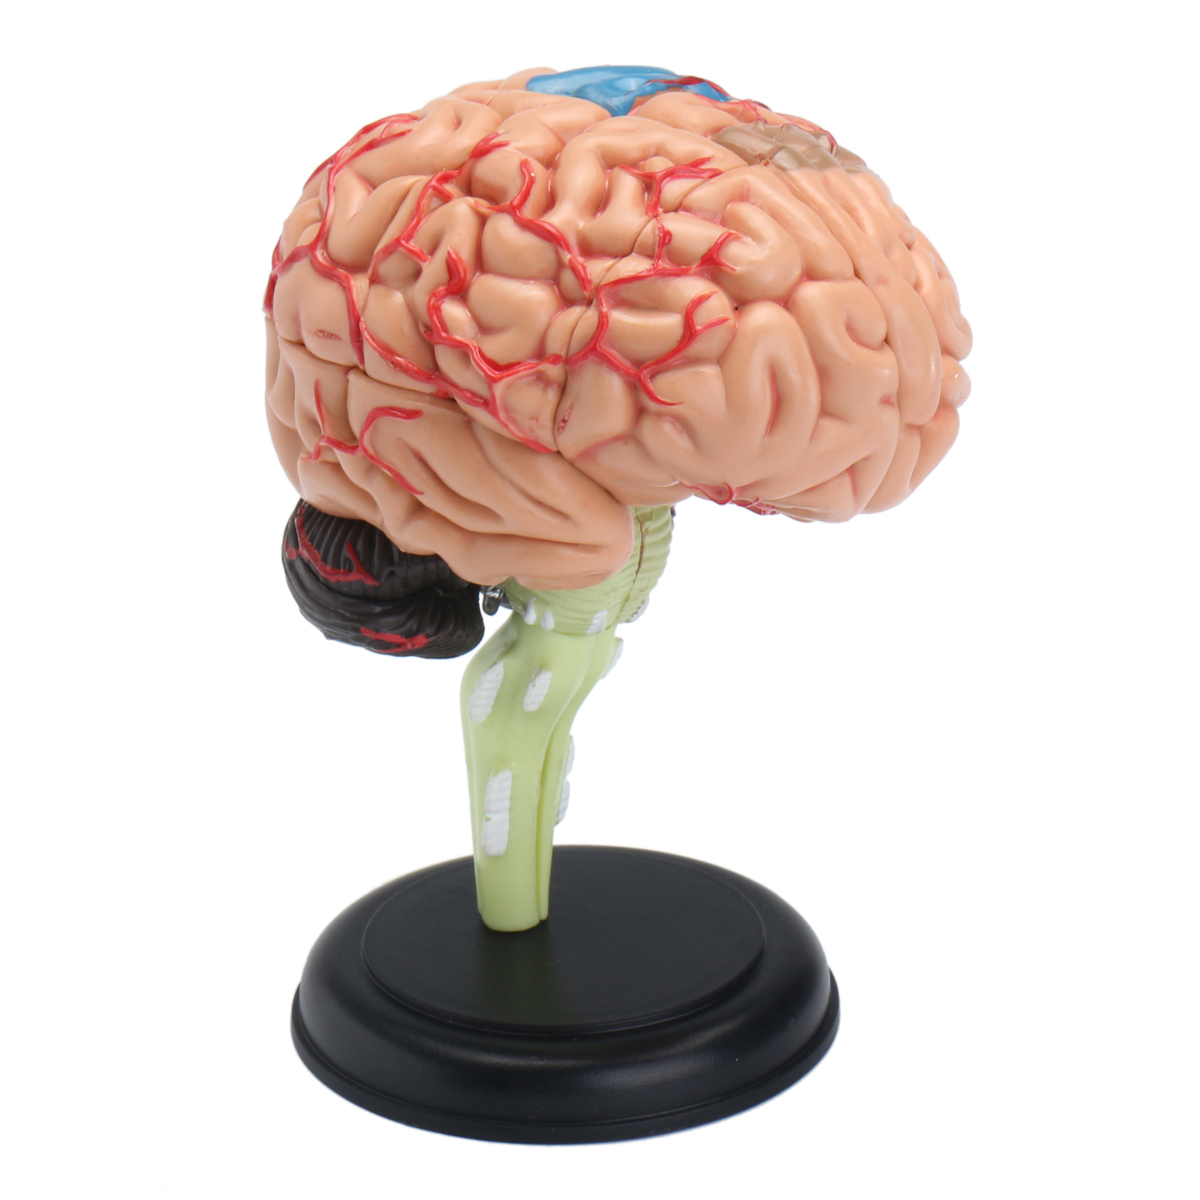 

4D Disassembled Anatomical Human Brain Model Anatomy Scientific Medical Teaching Tool